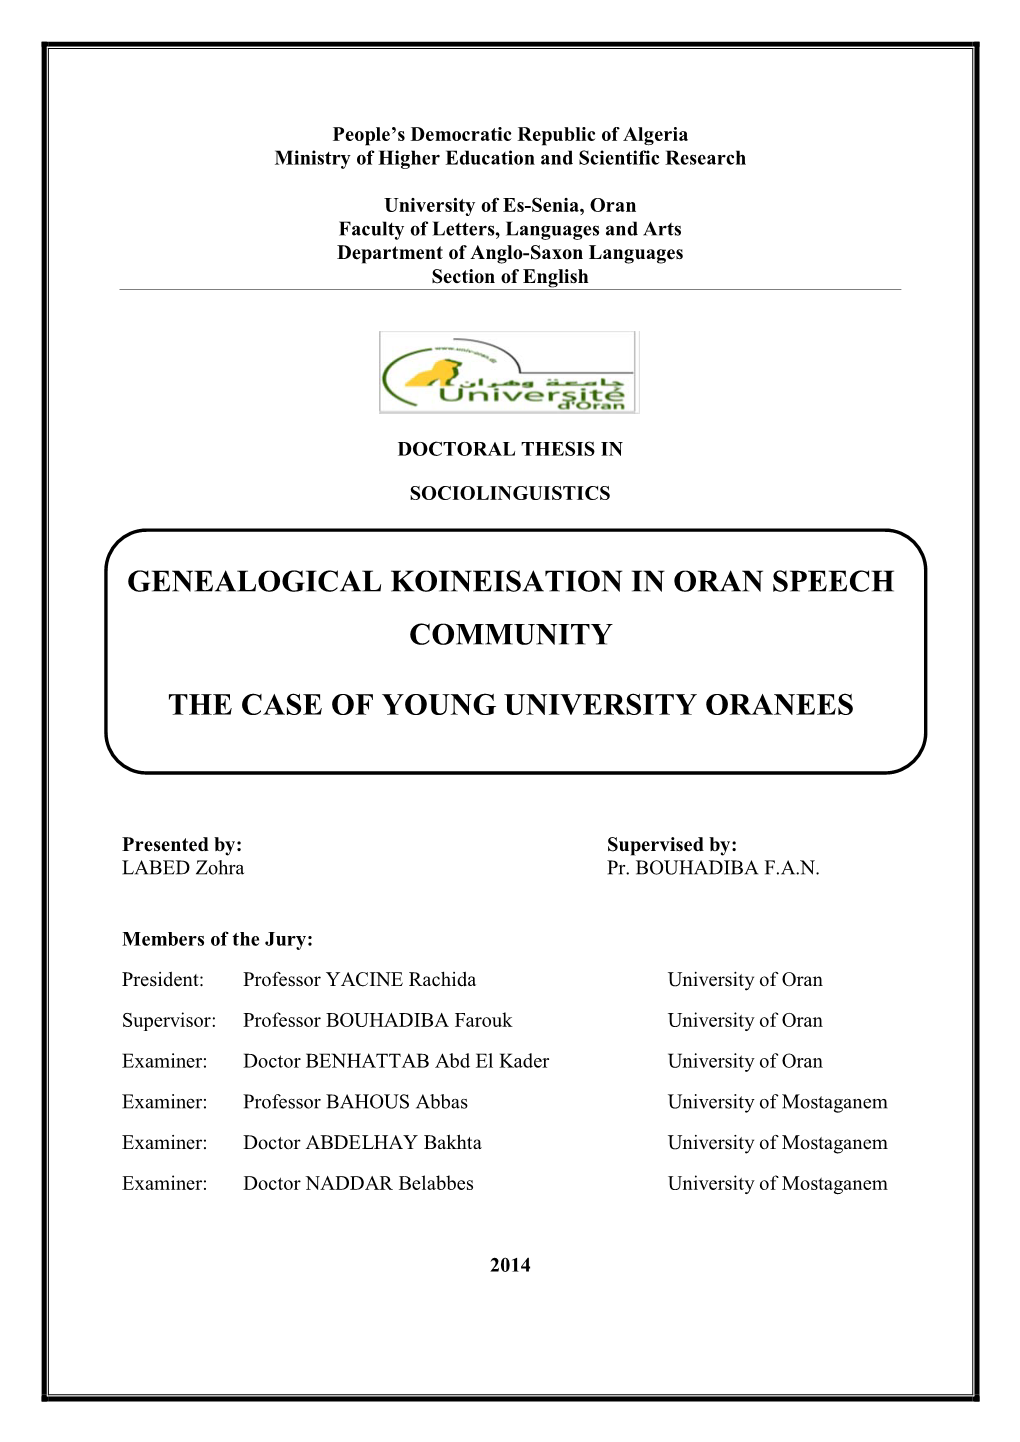 Genealogical Koineisation in Oran Speech Community The